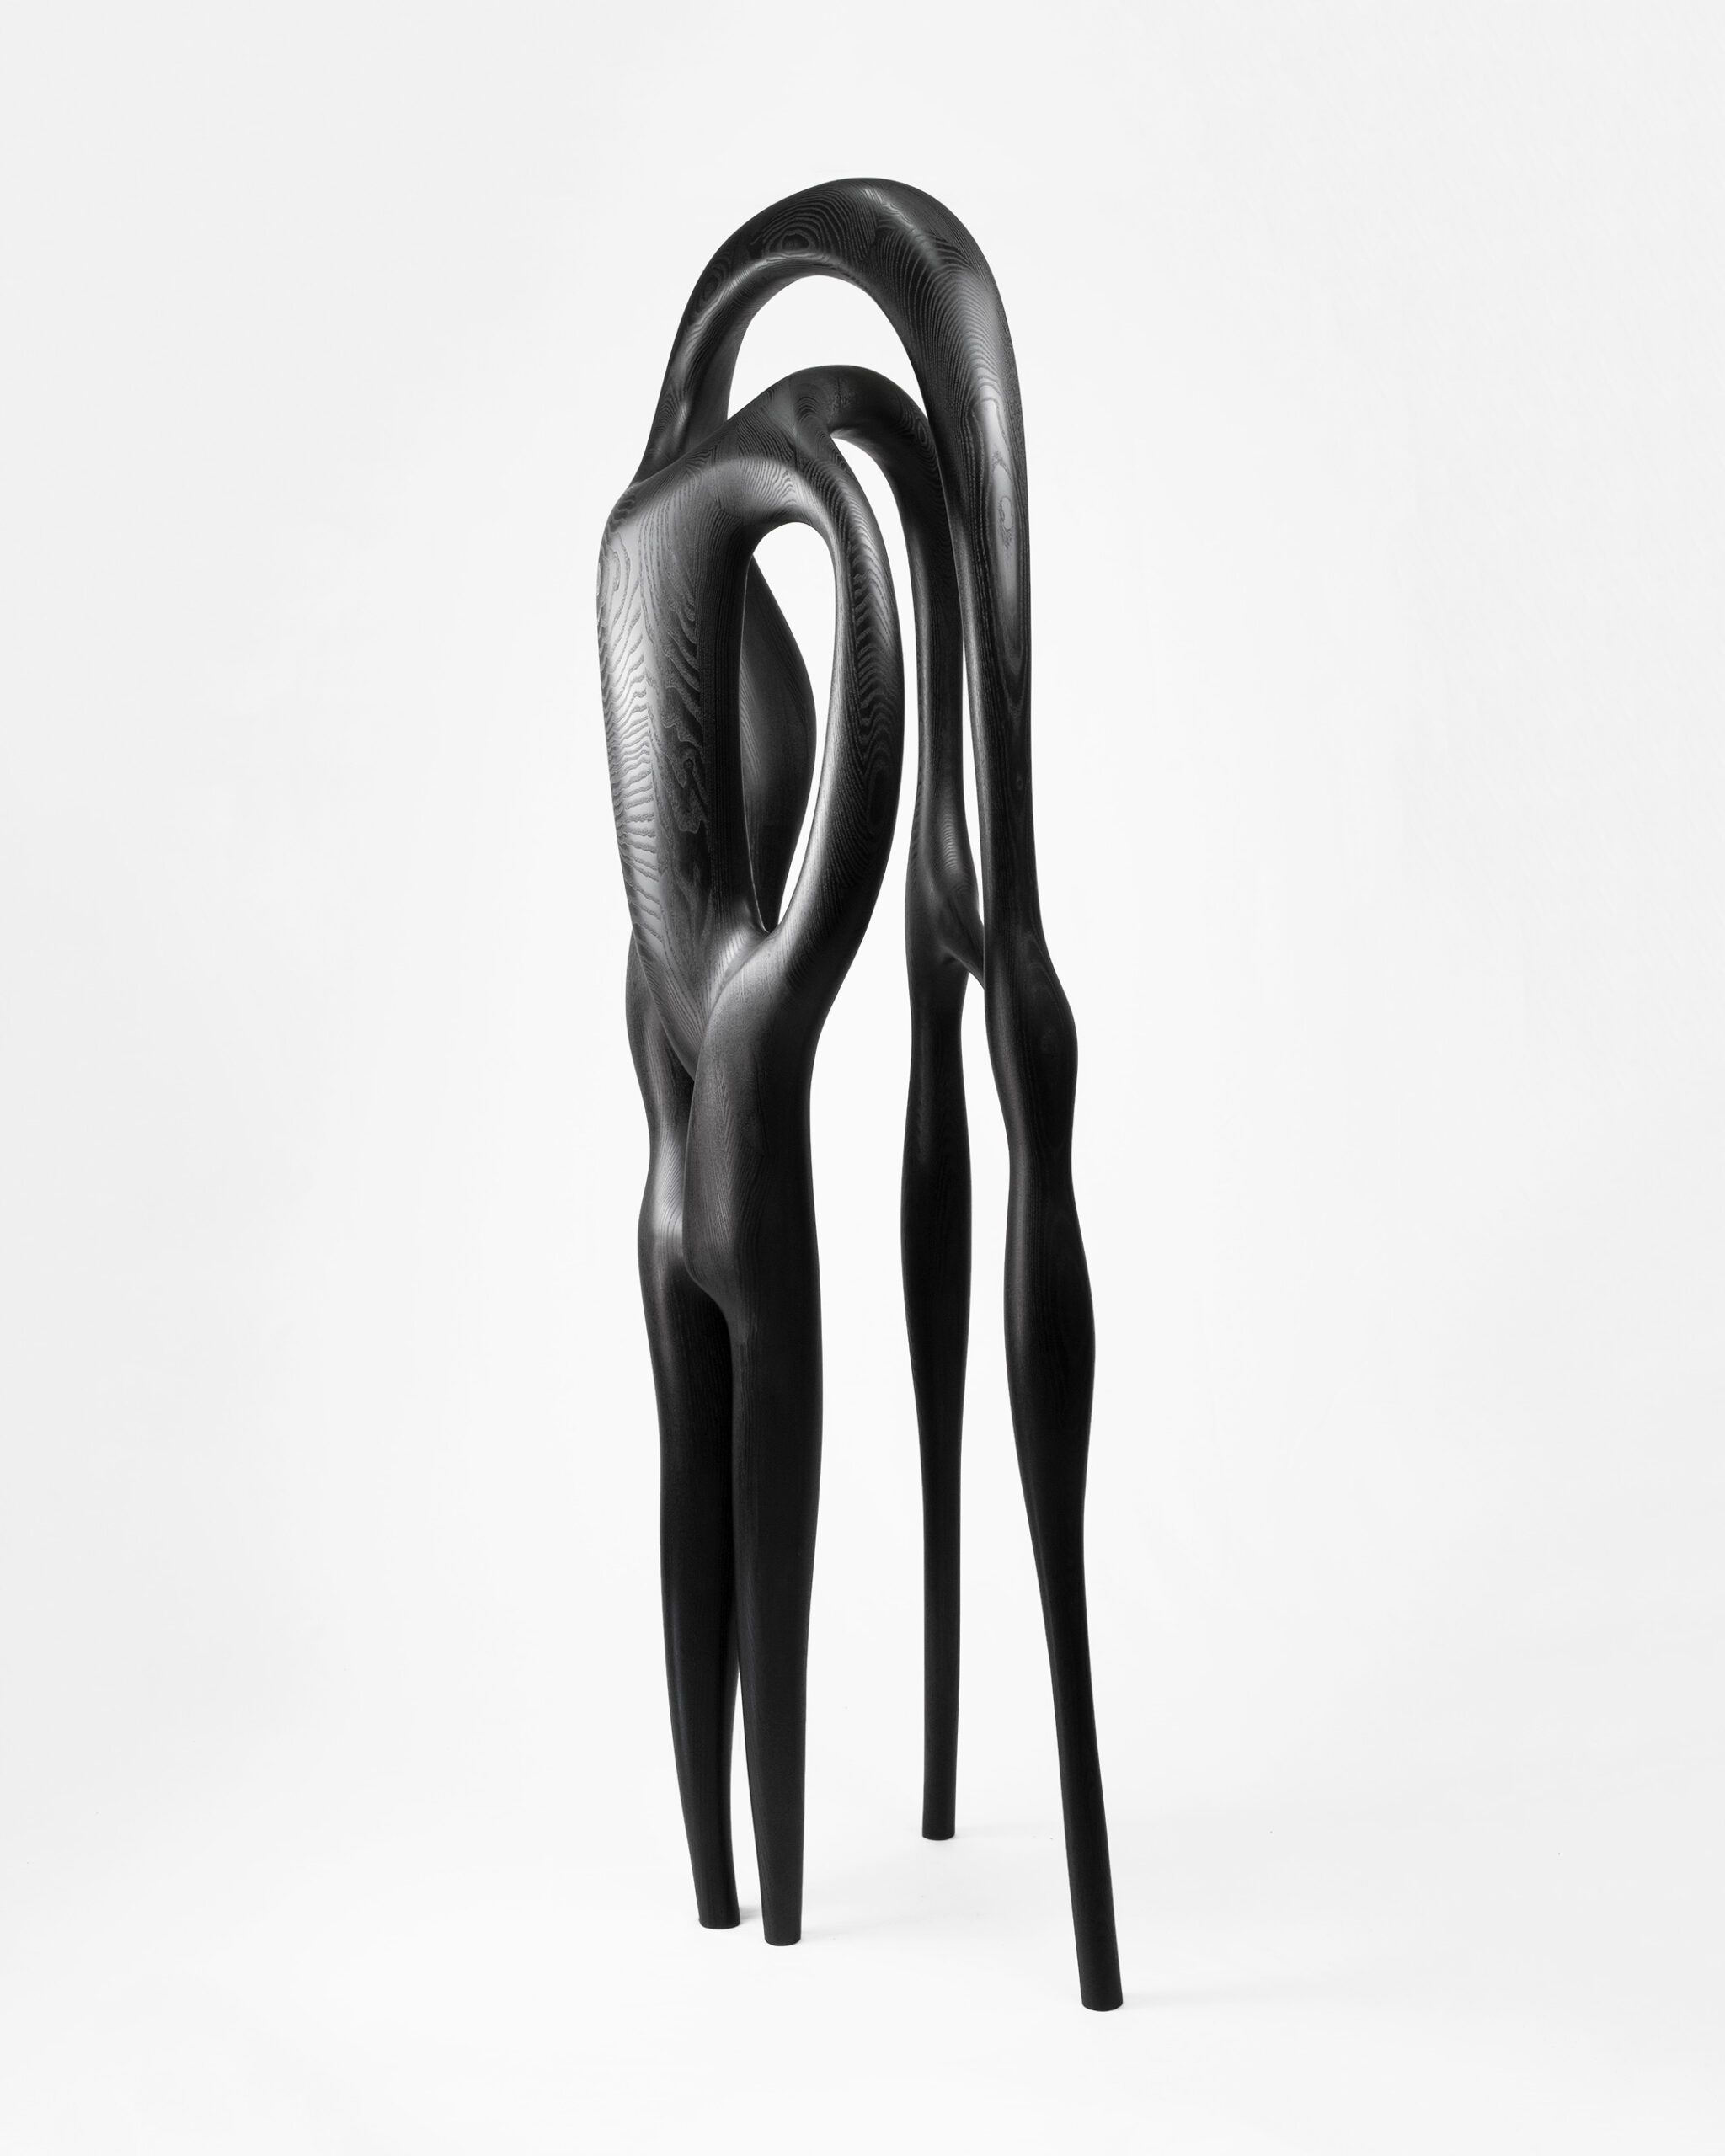 Art - contemporain - galerie d'art - galerie - bois - Maxime Goléo - sculpture - organique - nature - design - designer - artiste